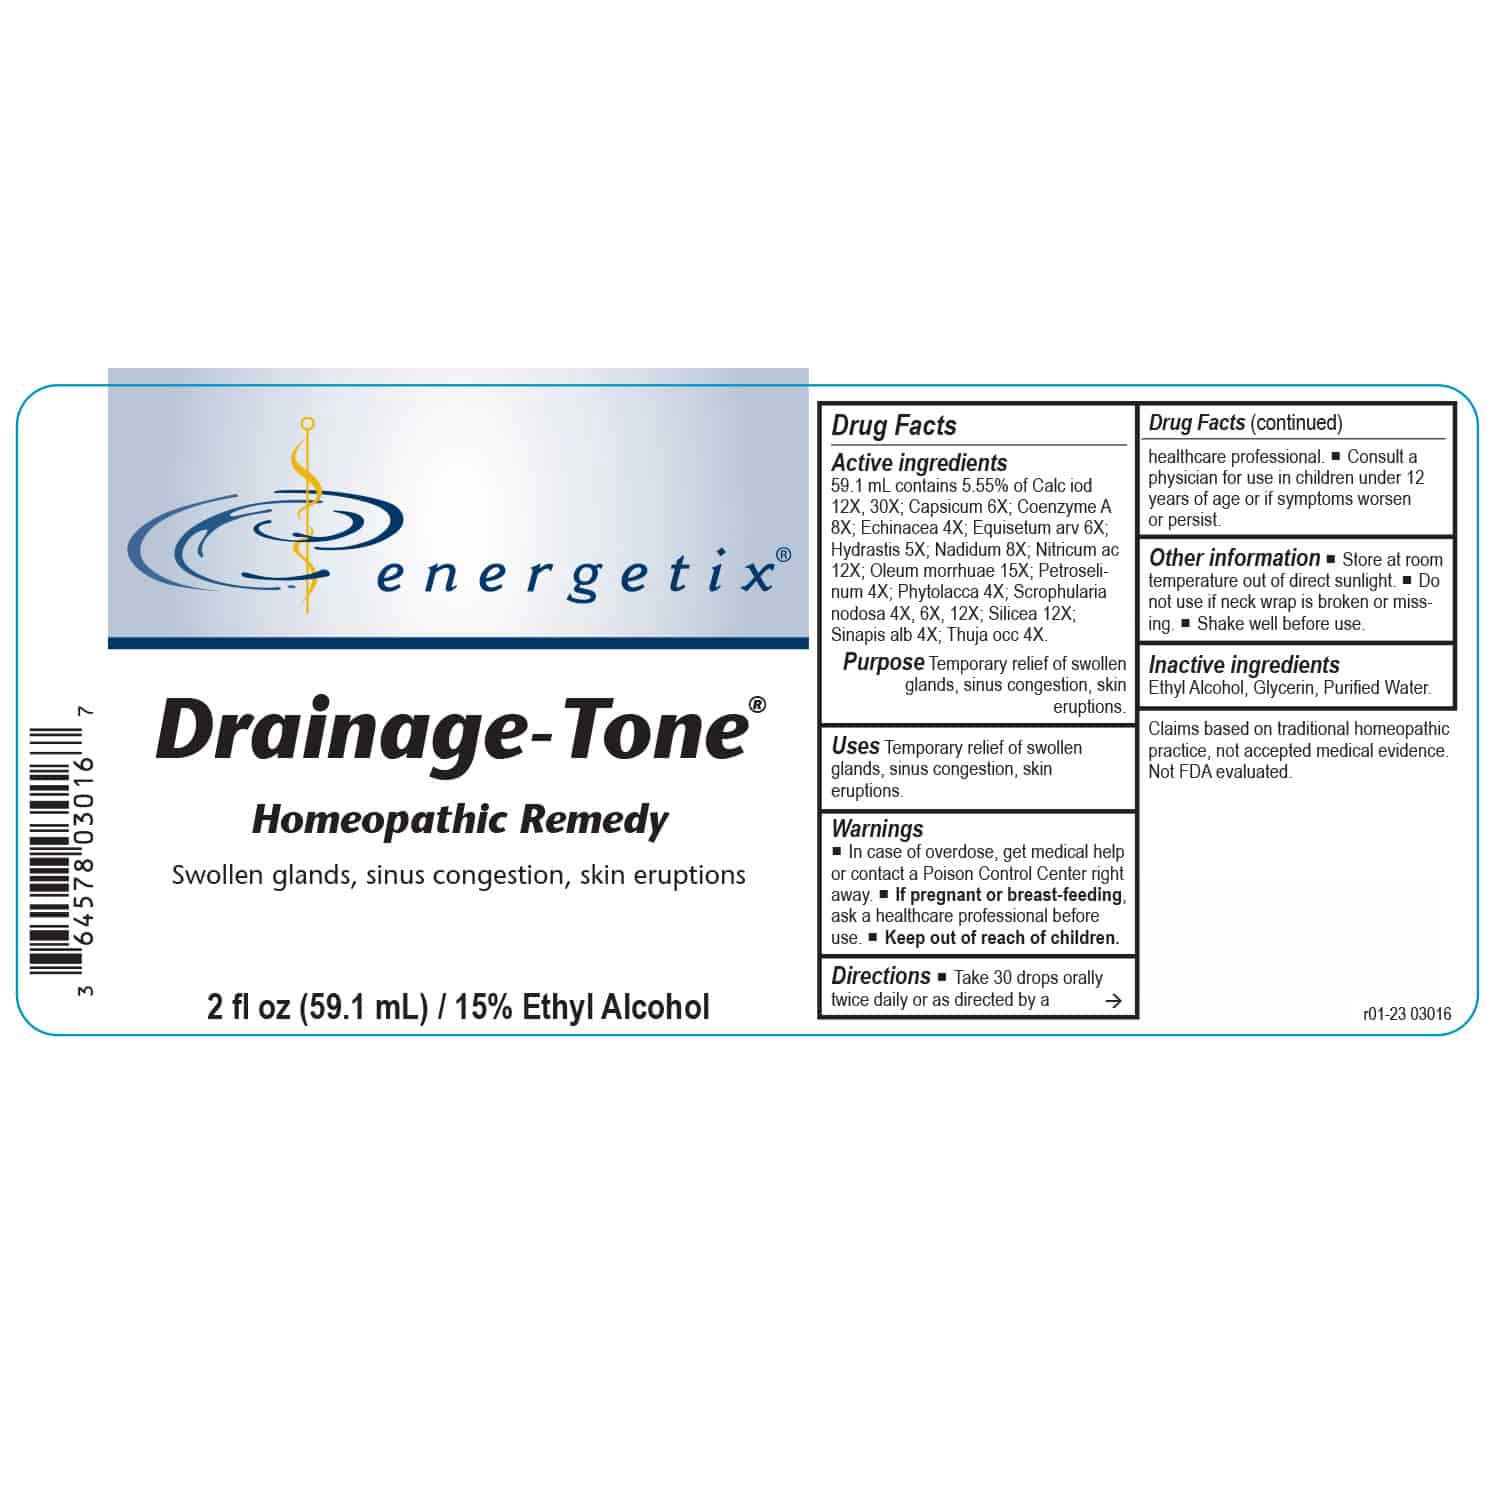 Energetix Drainage-Tone Label